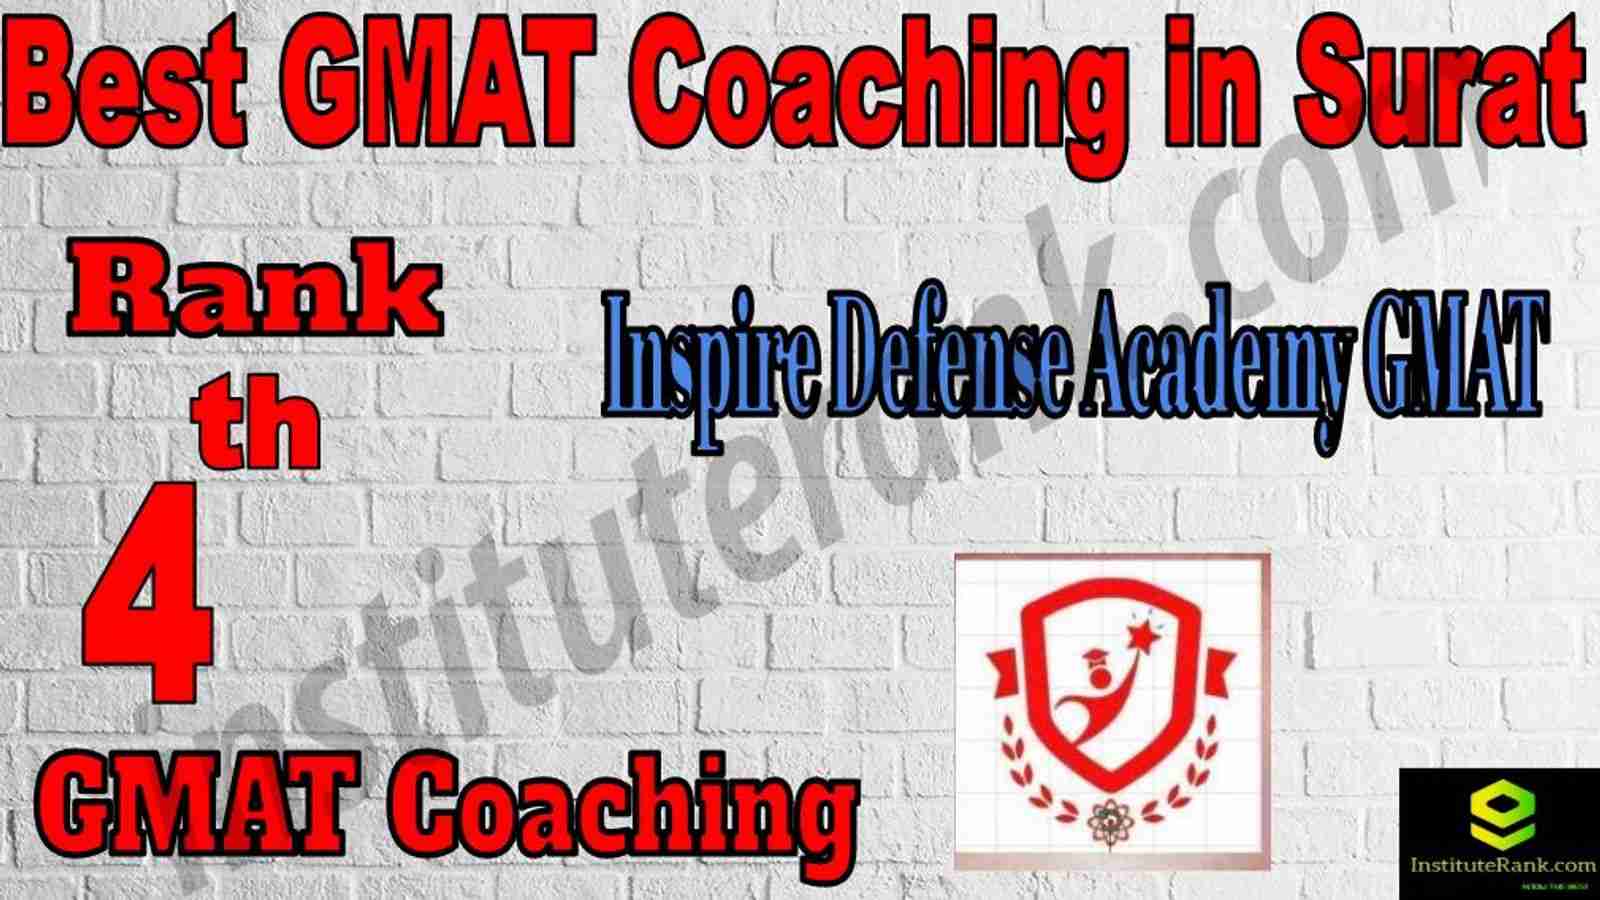 4th Best GMAT Coaching in Surat